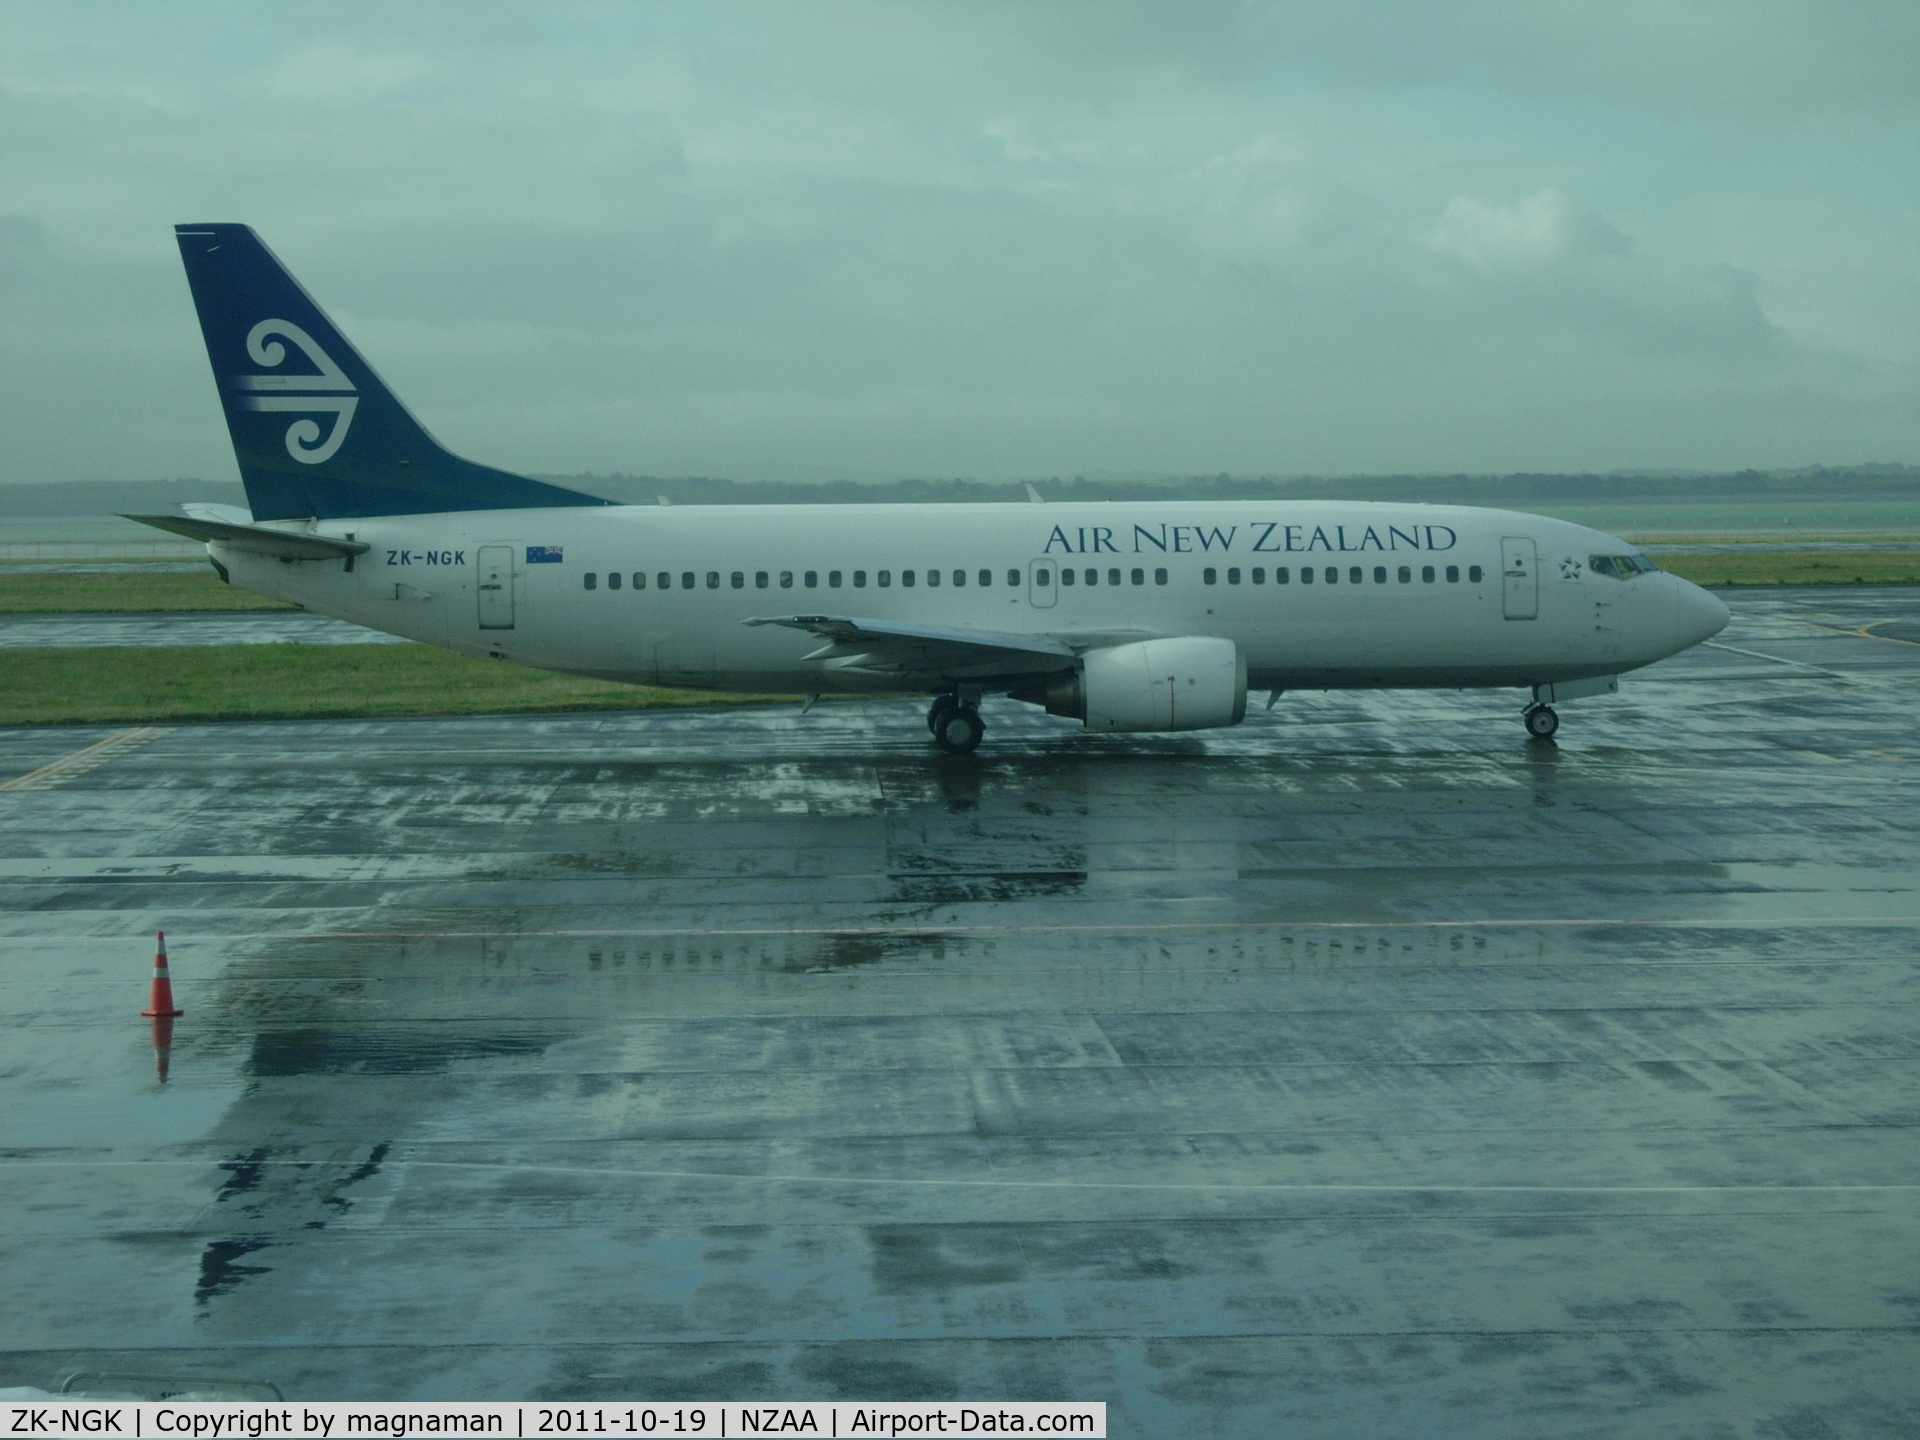 ZK-NGK, 1995 Boeing 737-3K2 C/N 26318, Leaving Auckland in the rain - bound for Wellington.